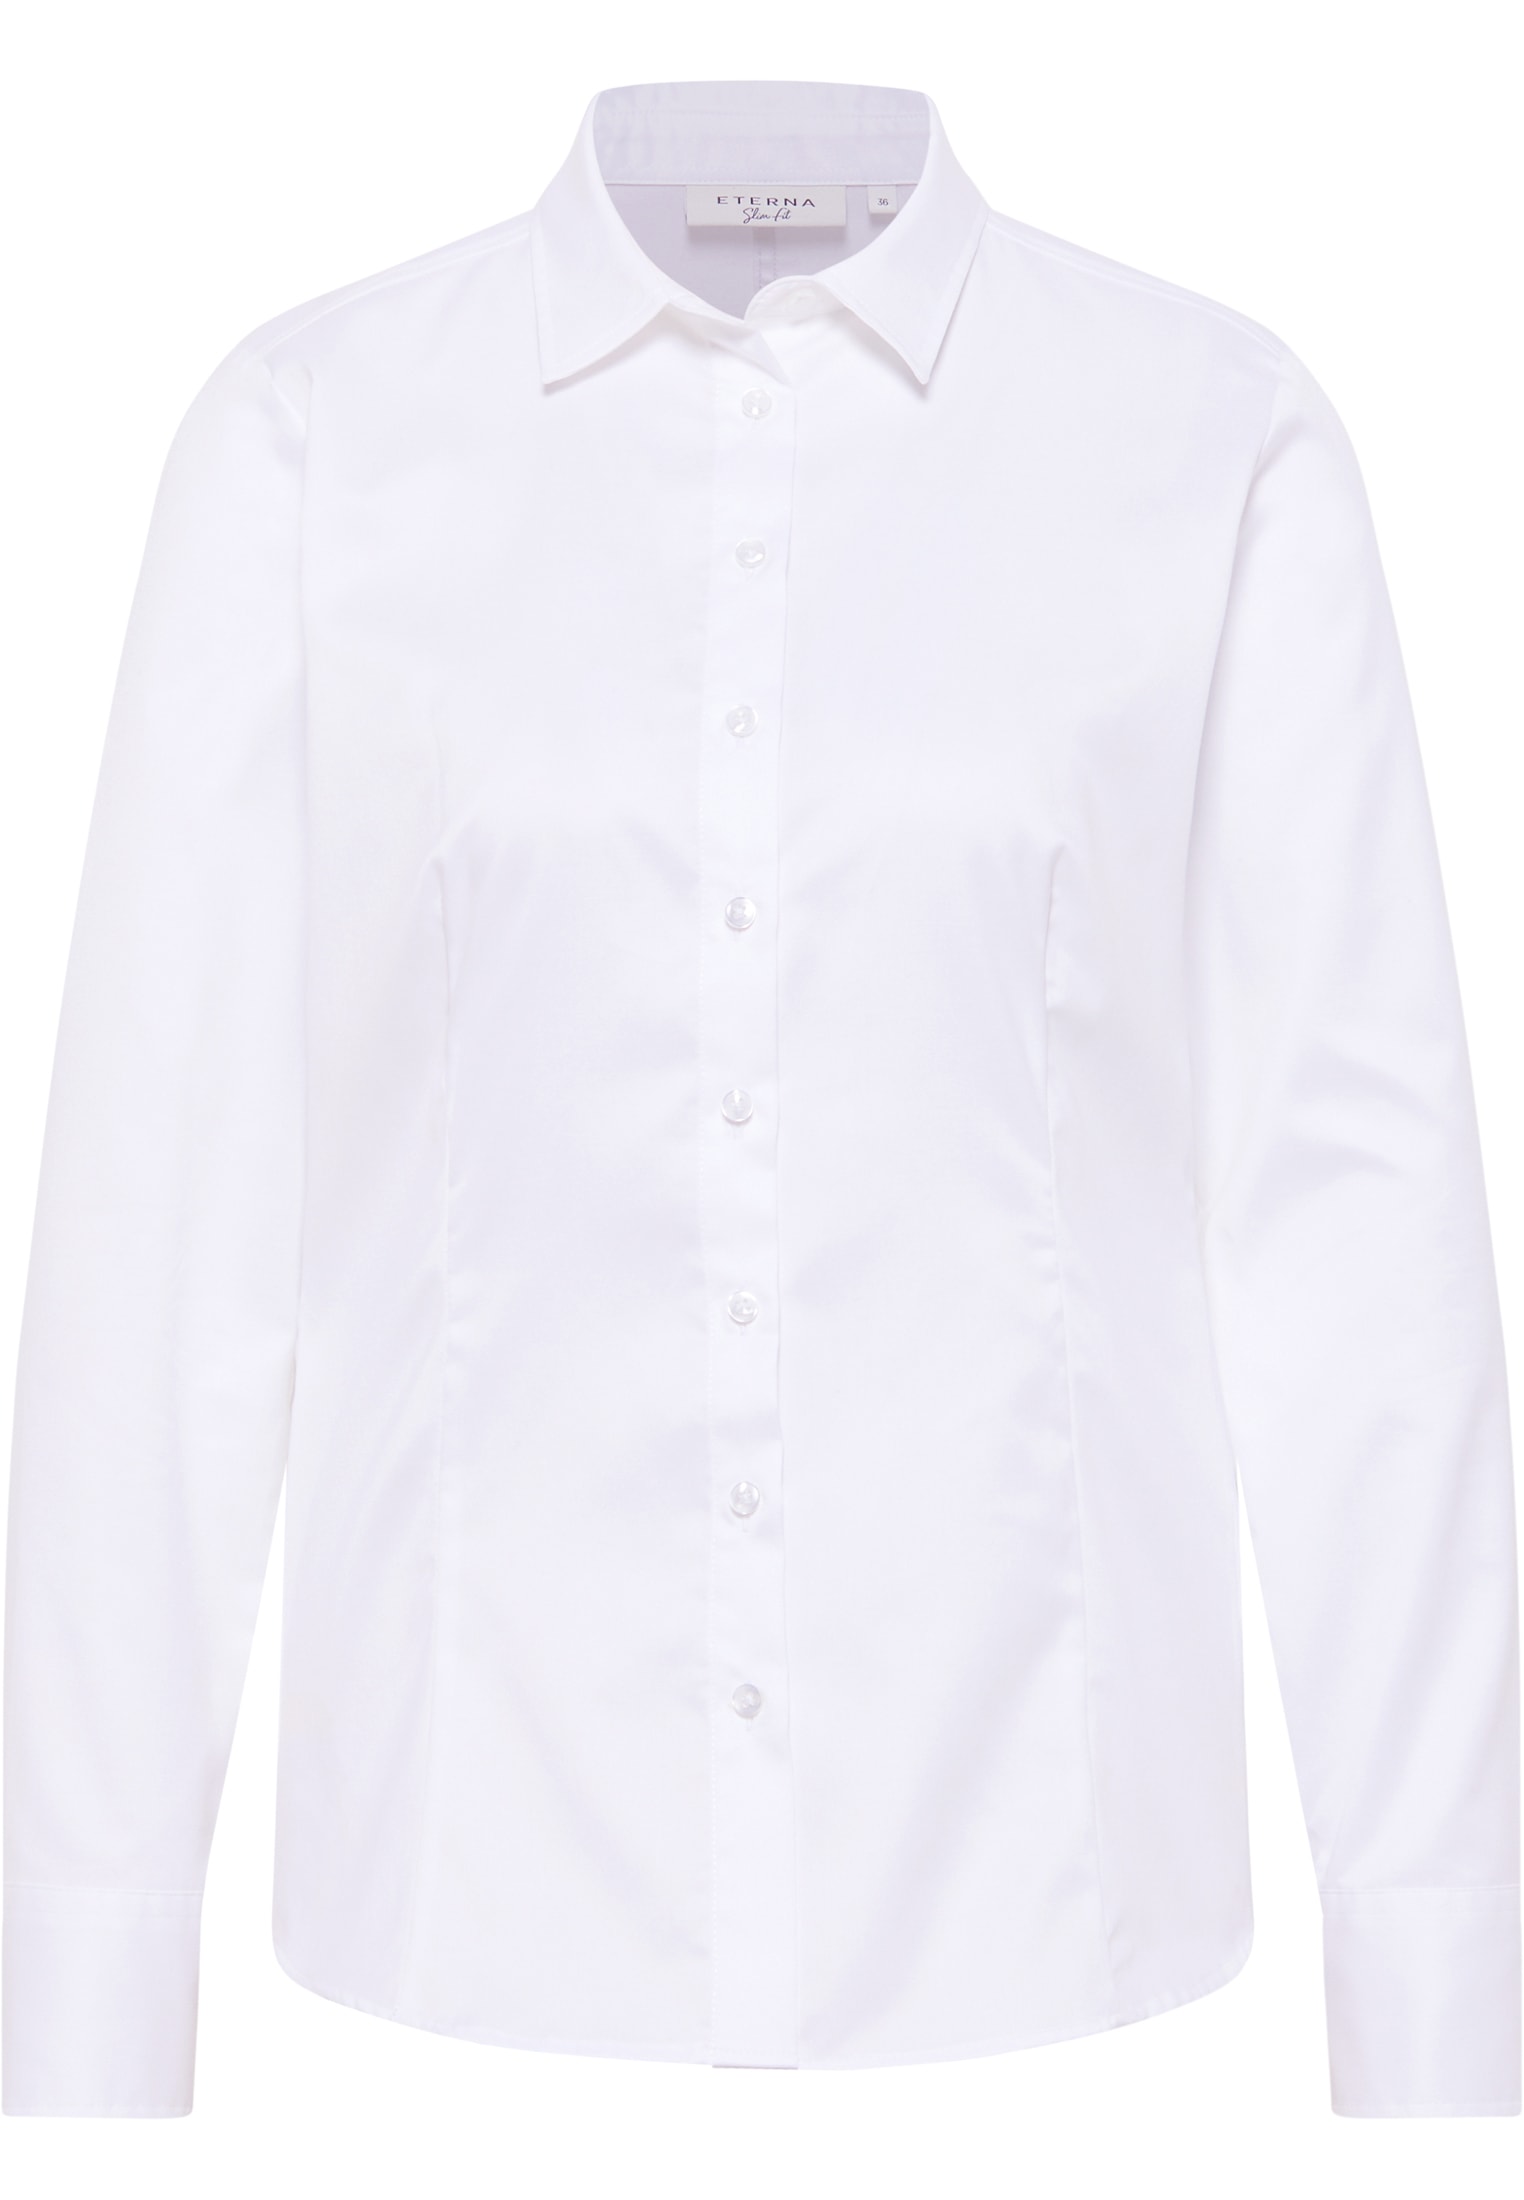 weiß Shirt | | Bluse in weiß 2BL00073-00-01-34-1/1 unifarben | Cover 34 | Langarm